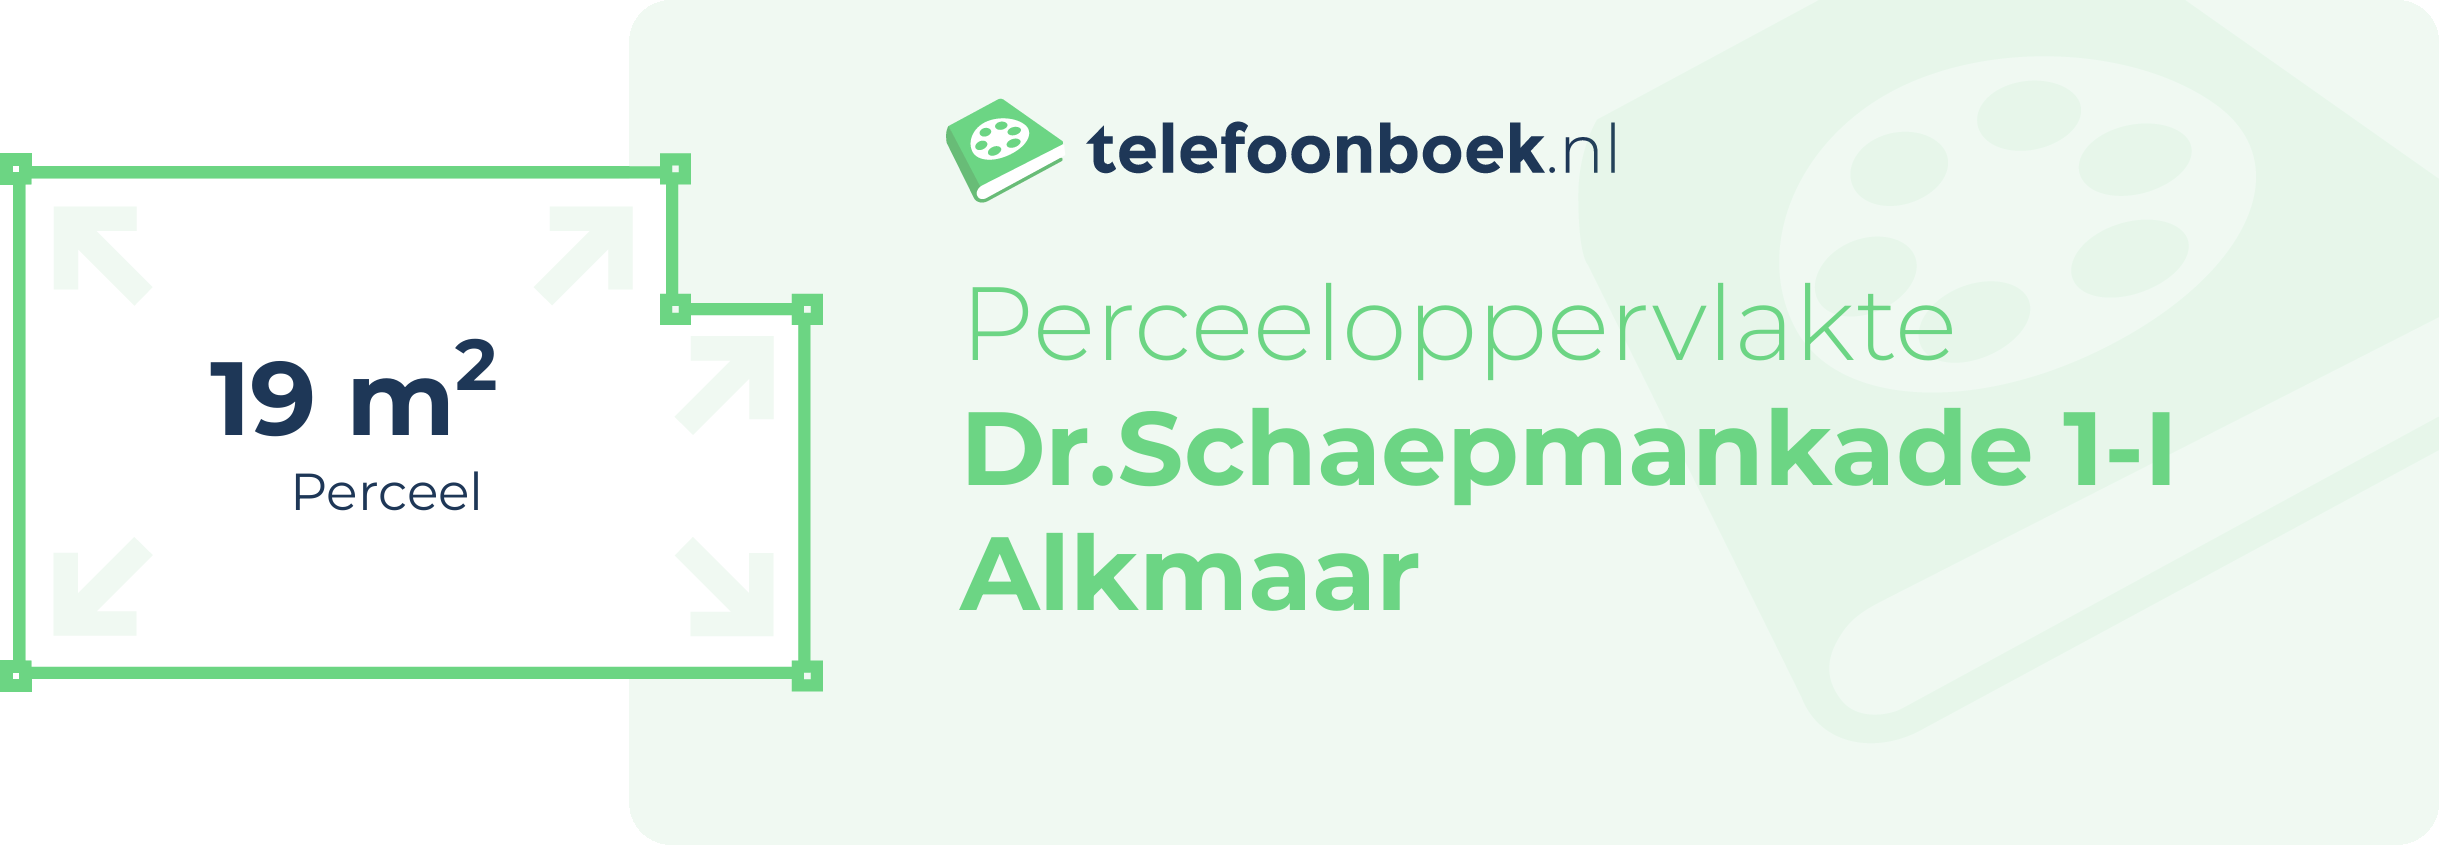 Perceeloppervlakte Dr.Schaepmankade 1-I Alkmaar